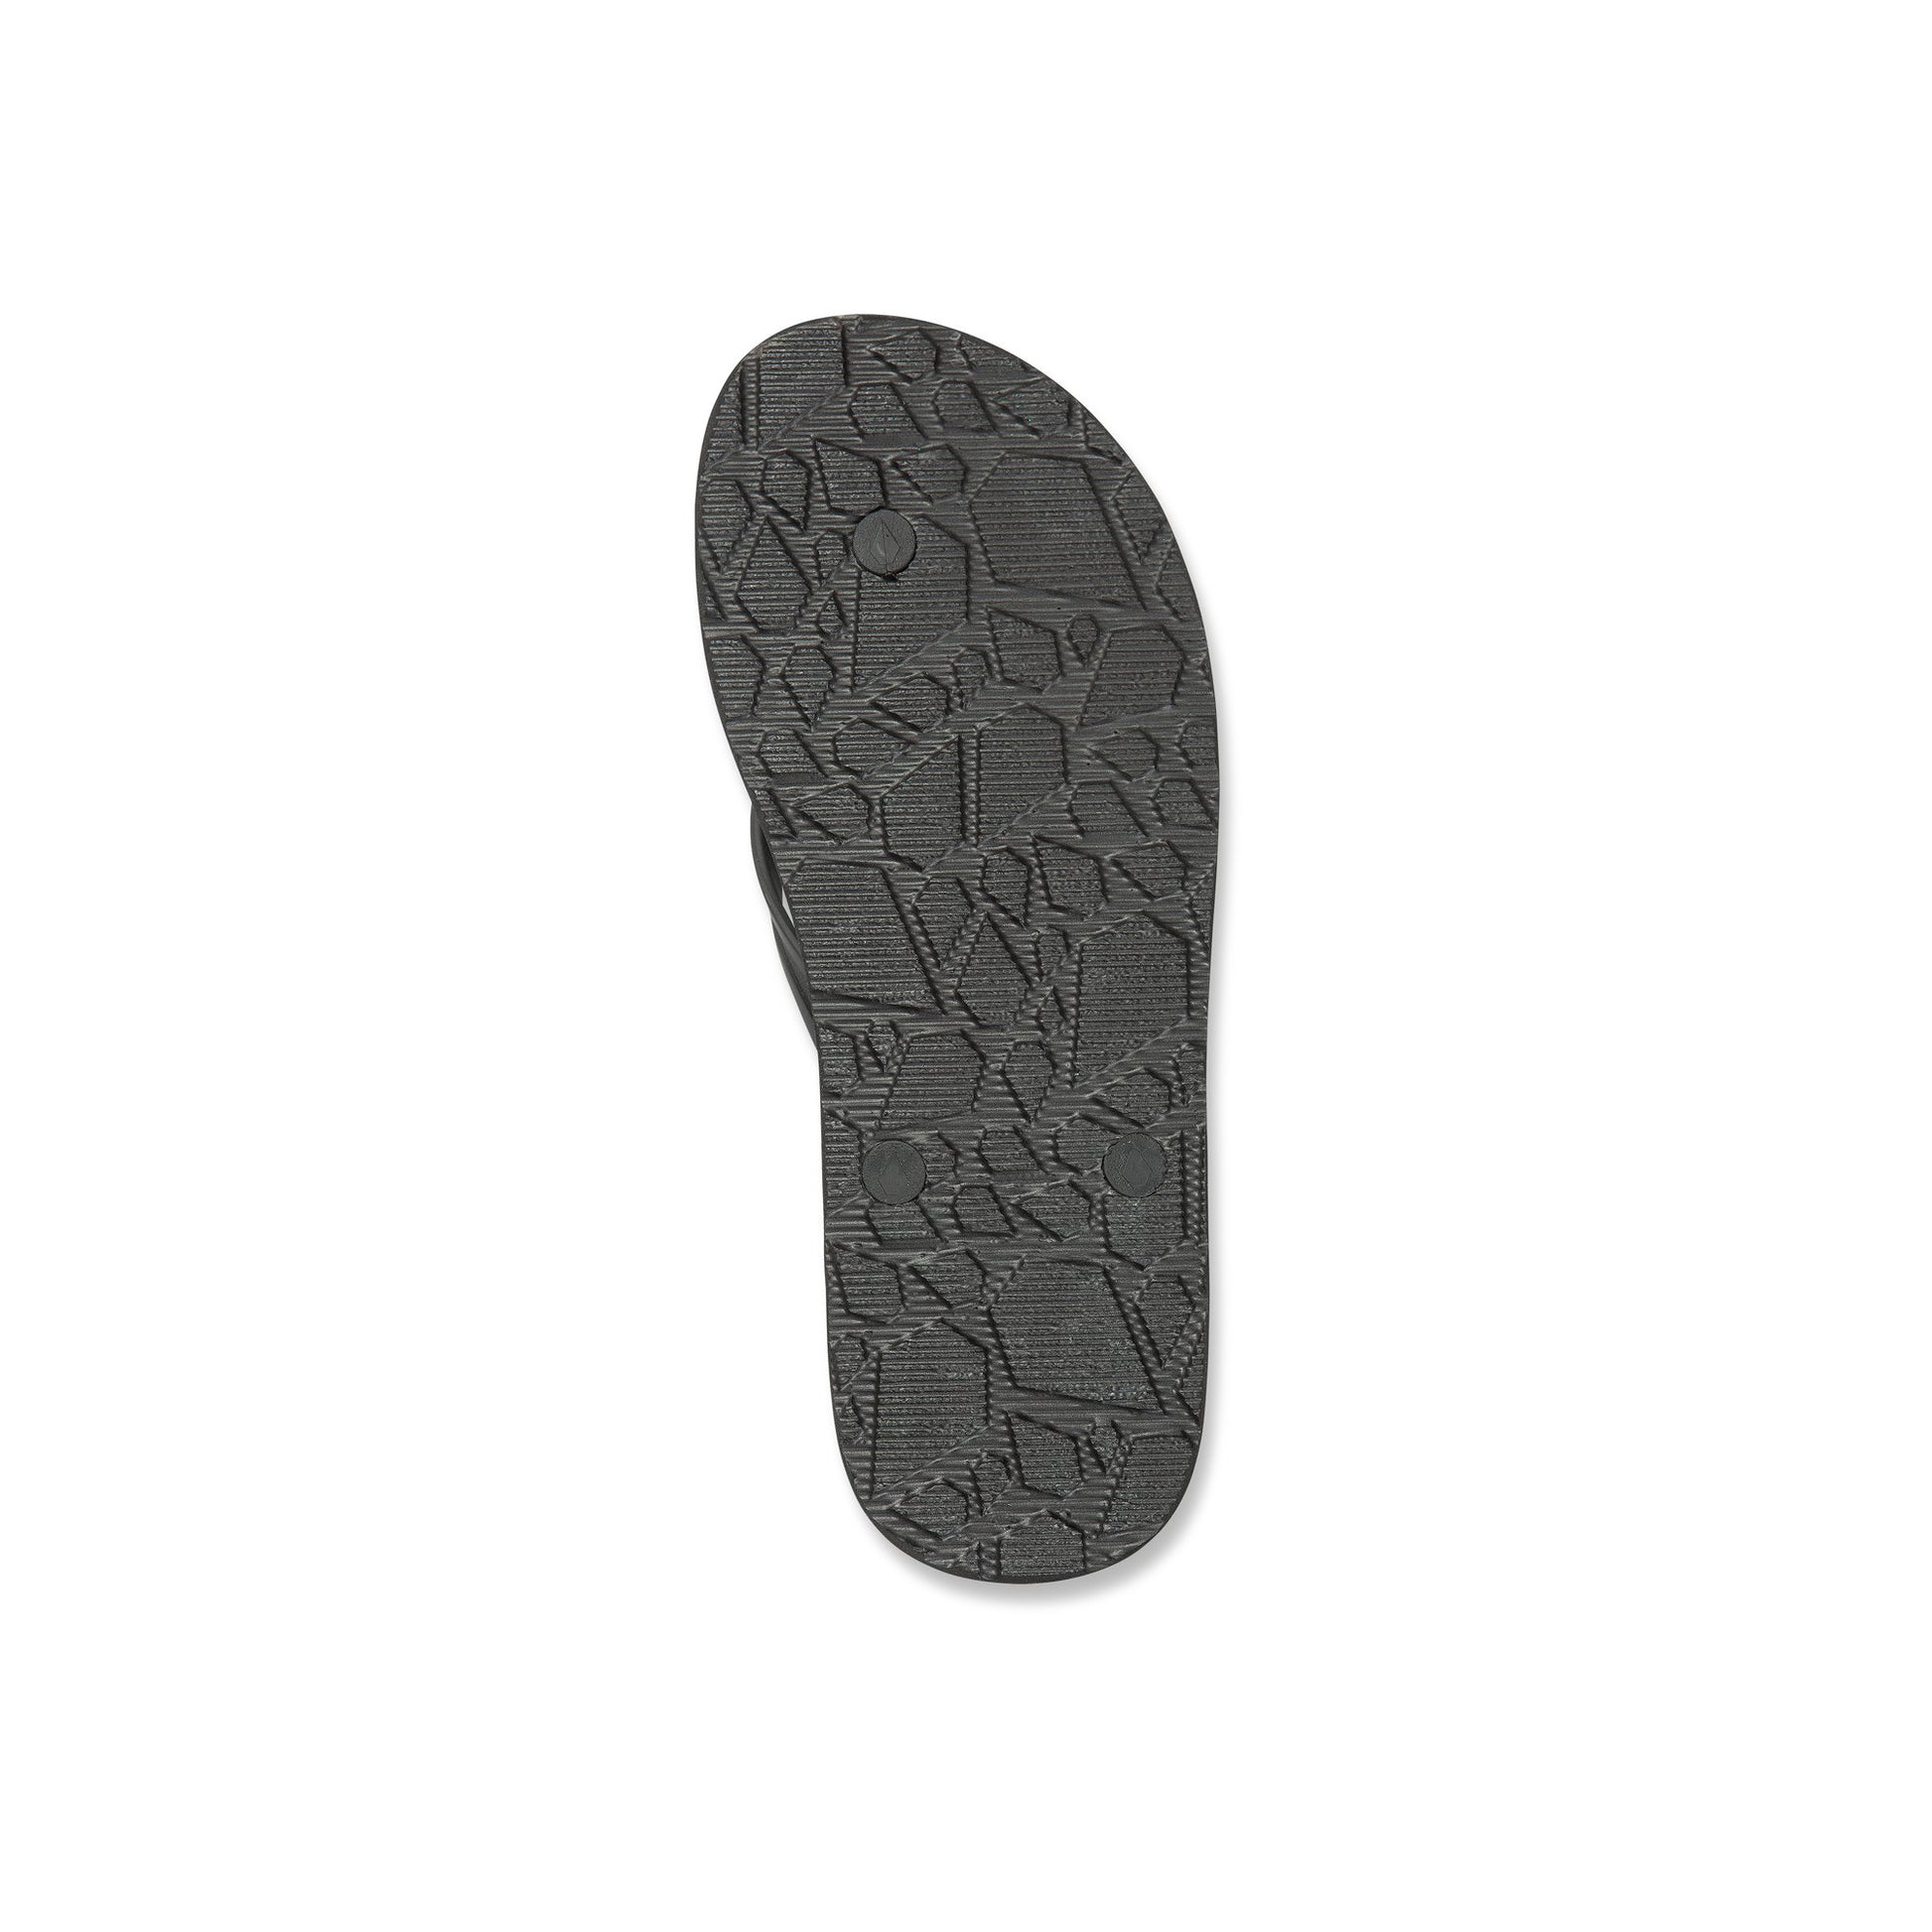 Rocker 2 Flip Flops - Pfeffer | Flip-Flops | Meistverkaufte Produkte | Neue Produkte | Neueste Produkte | Sammlung_Zalando | Schuhwerk | Volcom-Shop | surfdevils.com